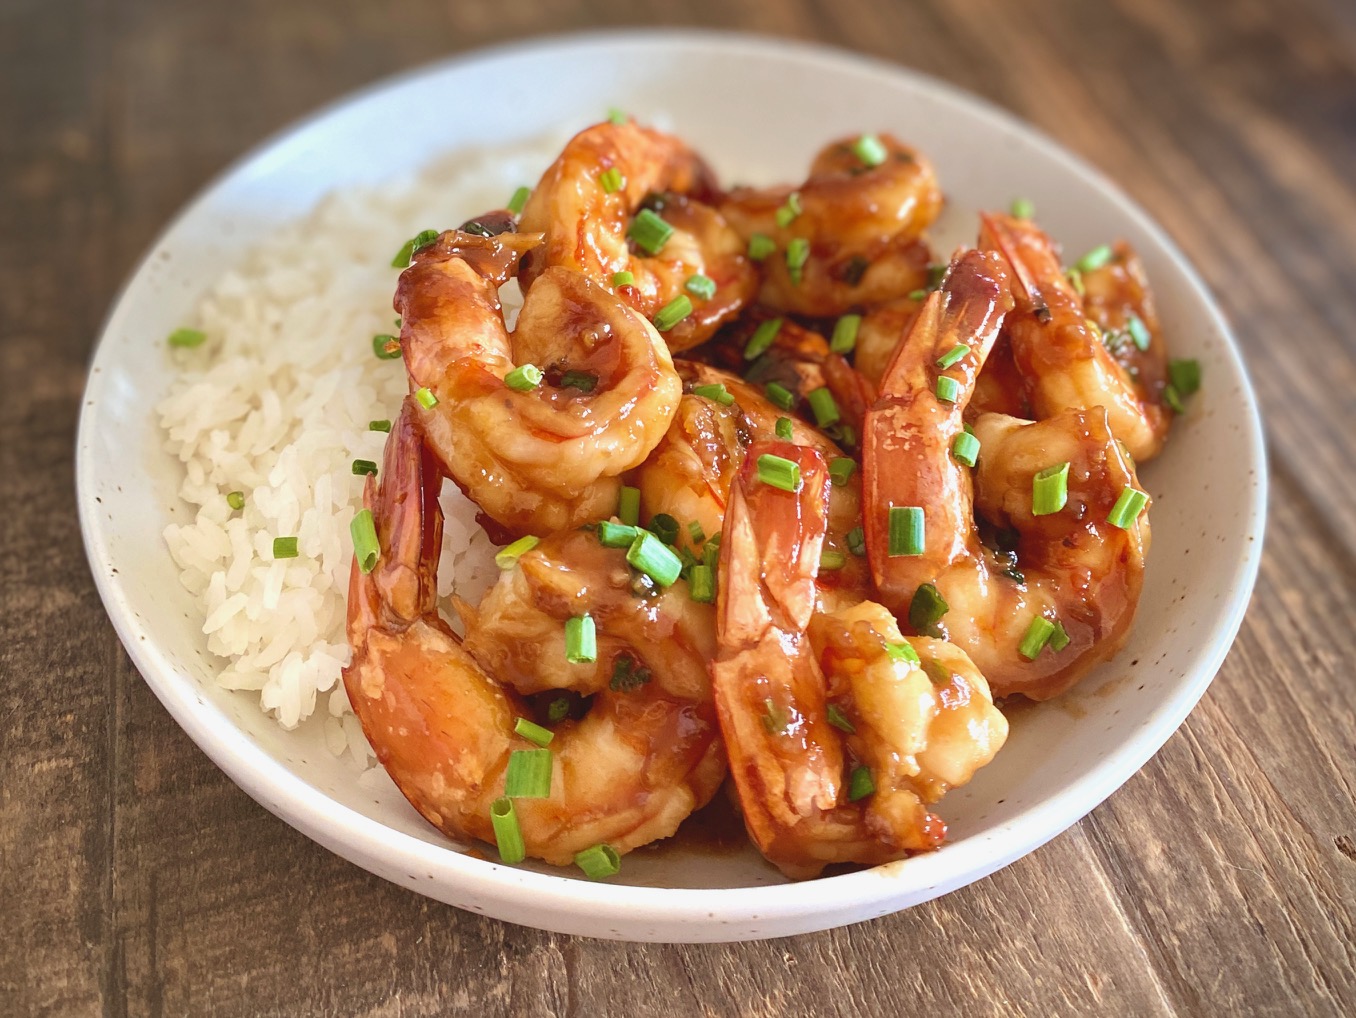 Stiryfry shrimp with honey and garlic over rice